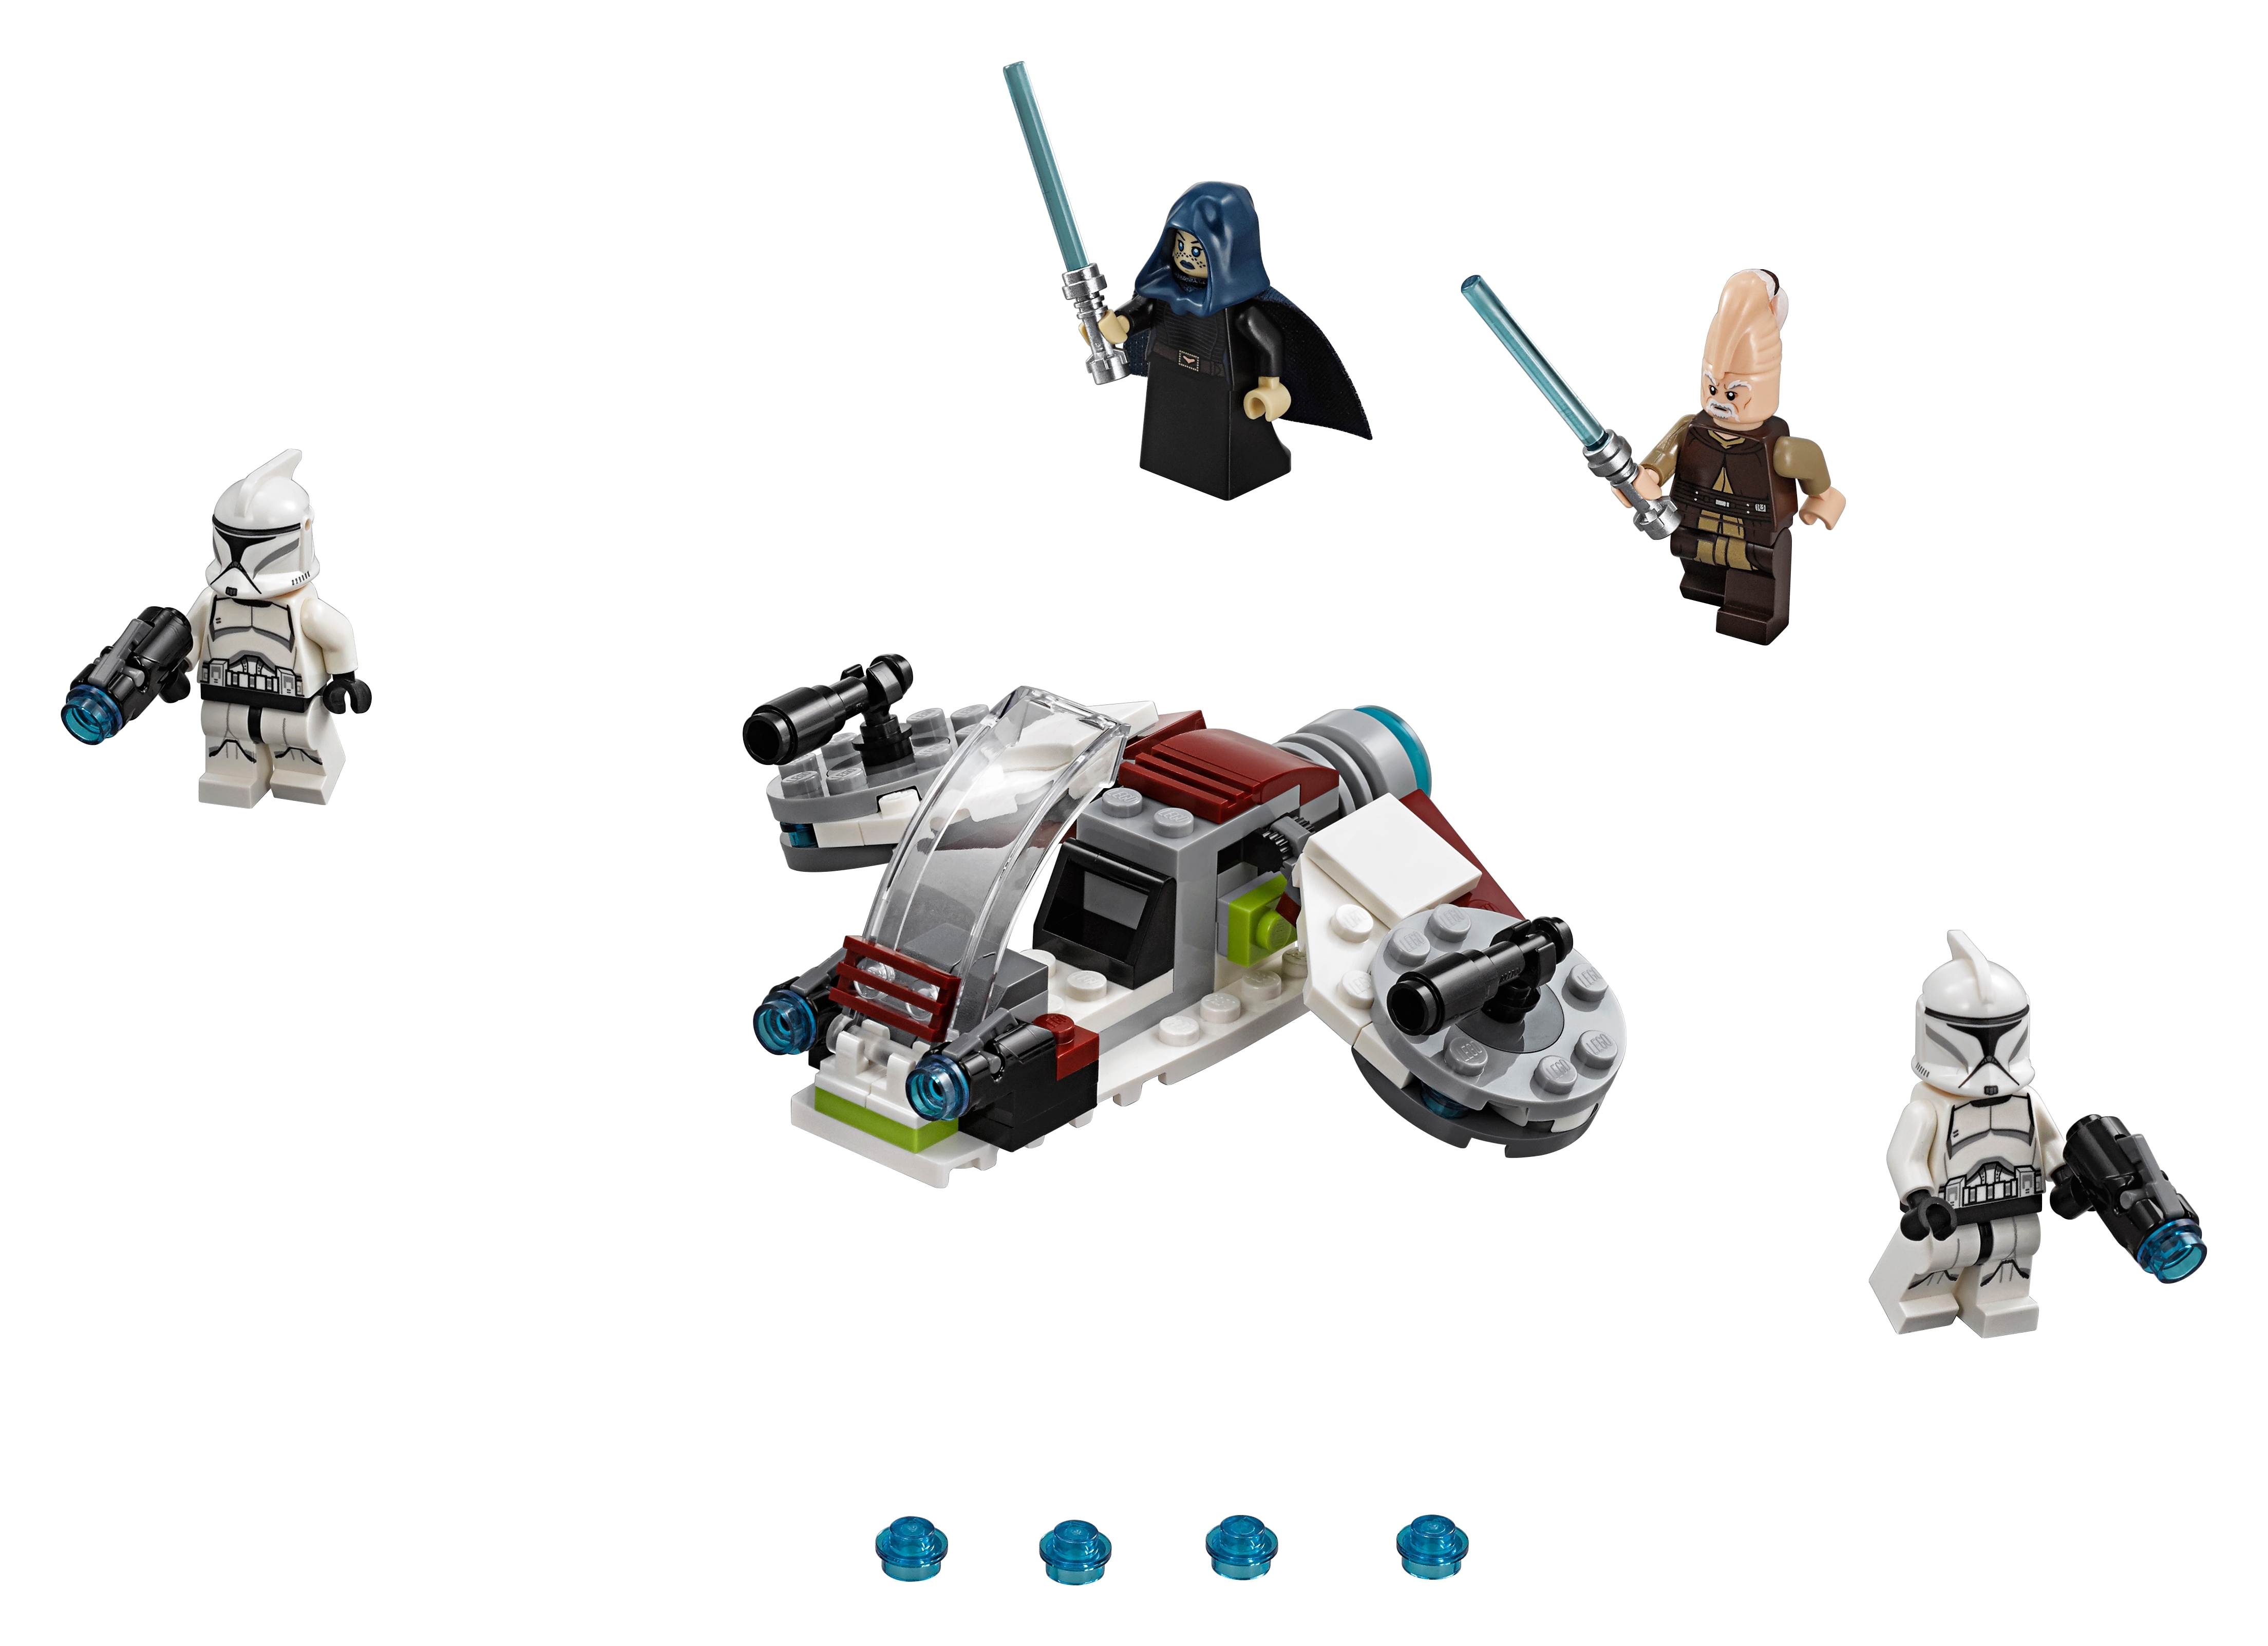 Lego Star Wars Jedi Clone Troopers Battle Pack BARRISS OFFEE Mini Figure 75206 